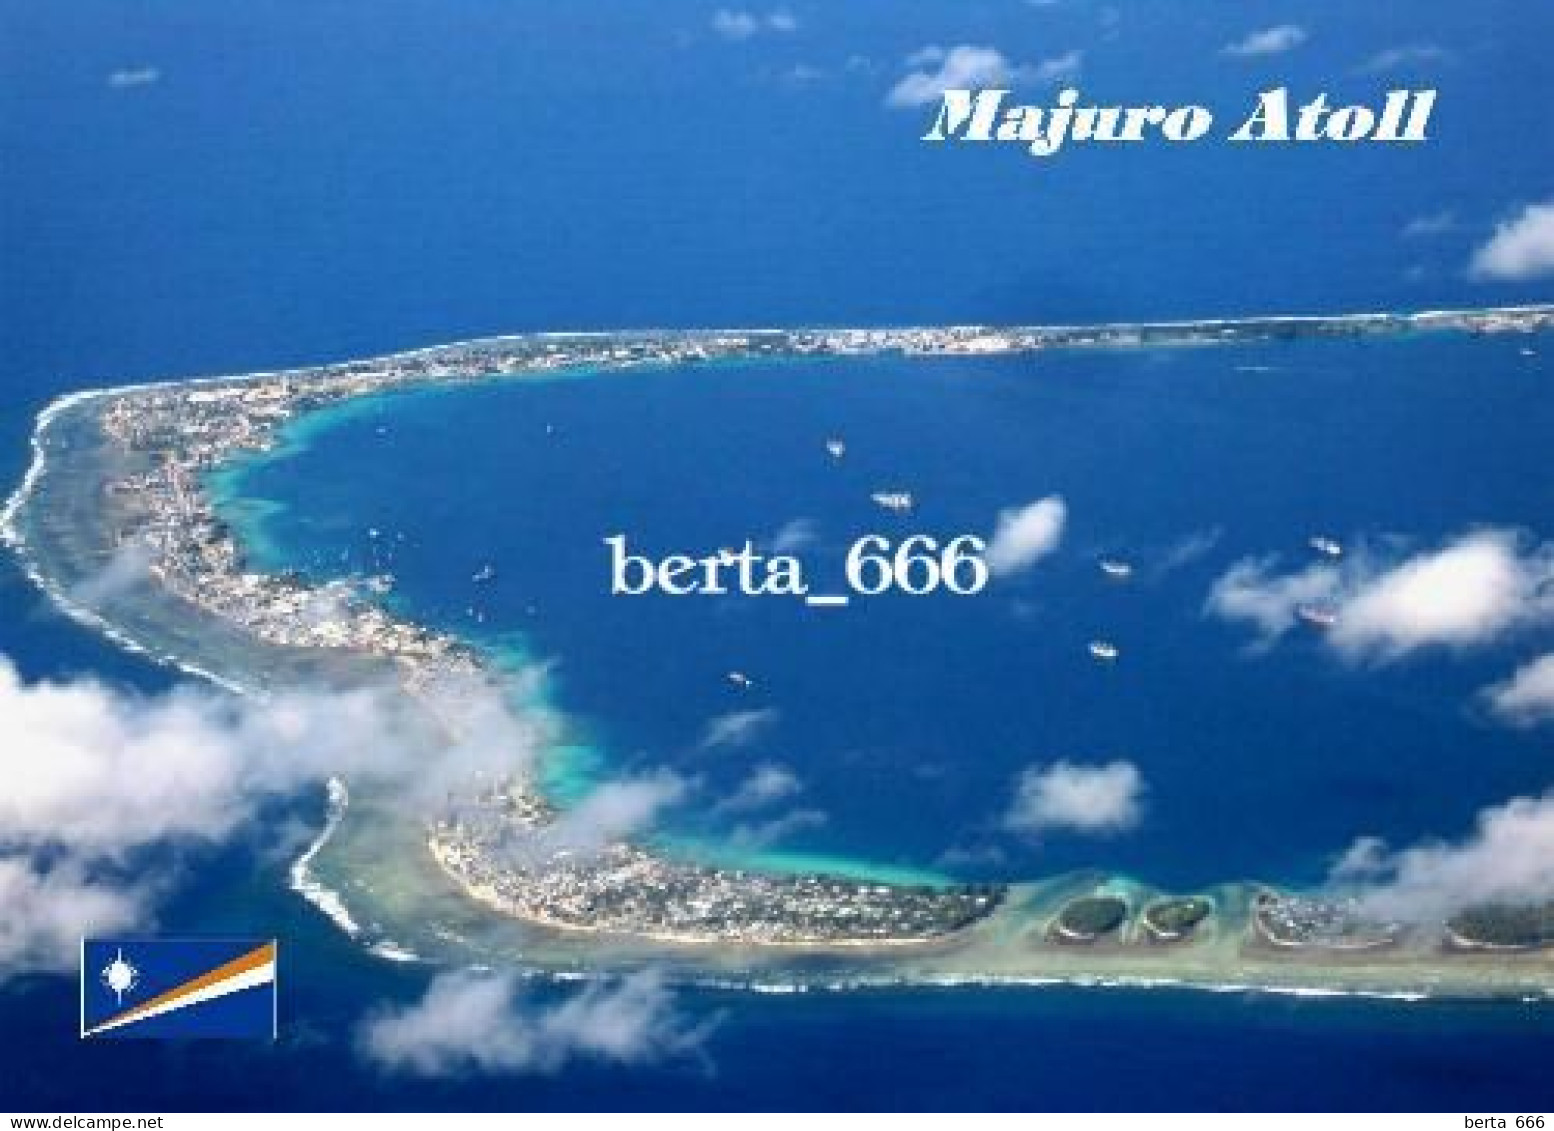 Marshall Islands Majuro Atoll Aerial View New Postcard - Marshalleilanden